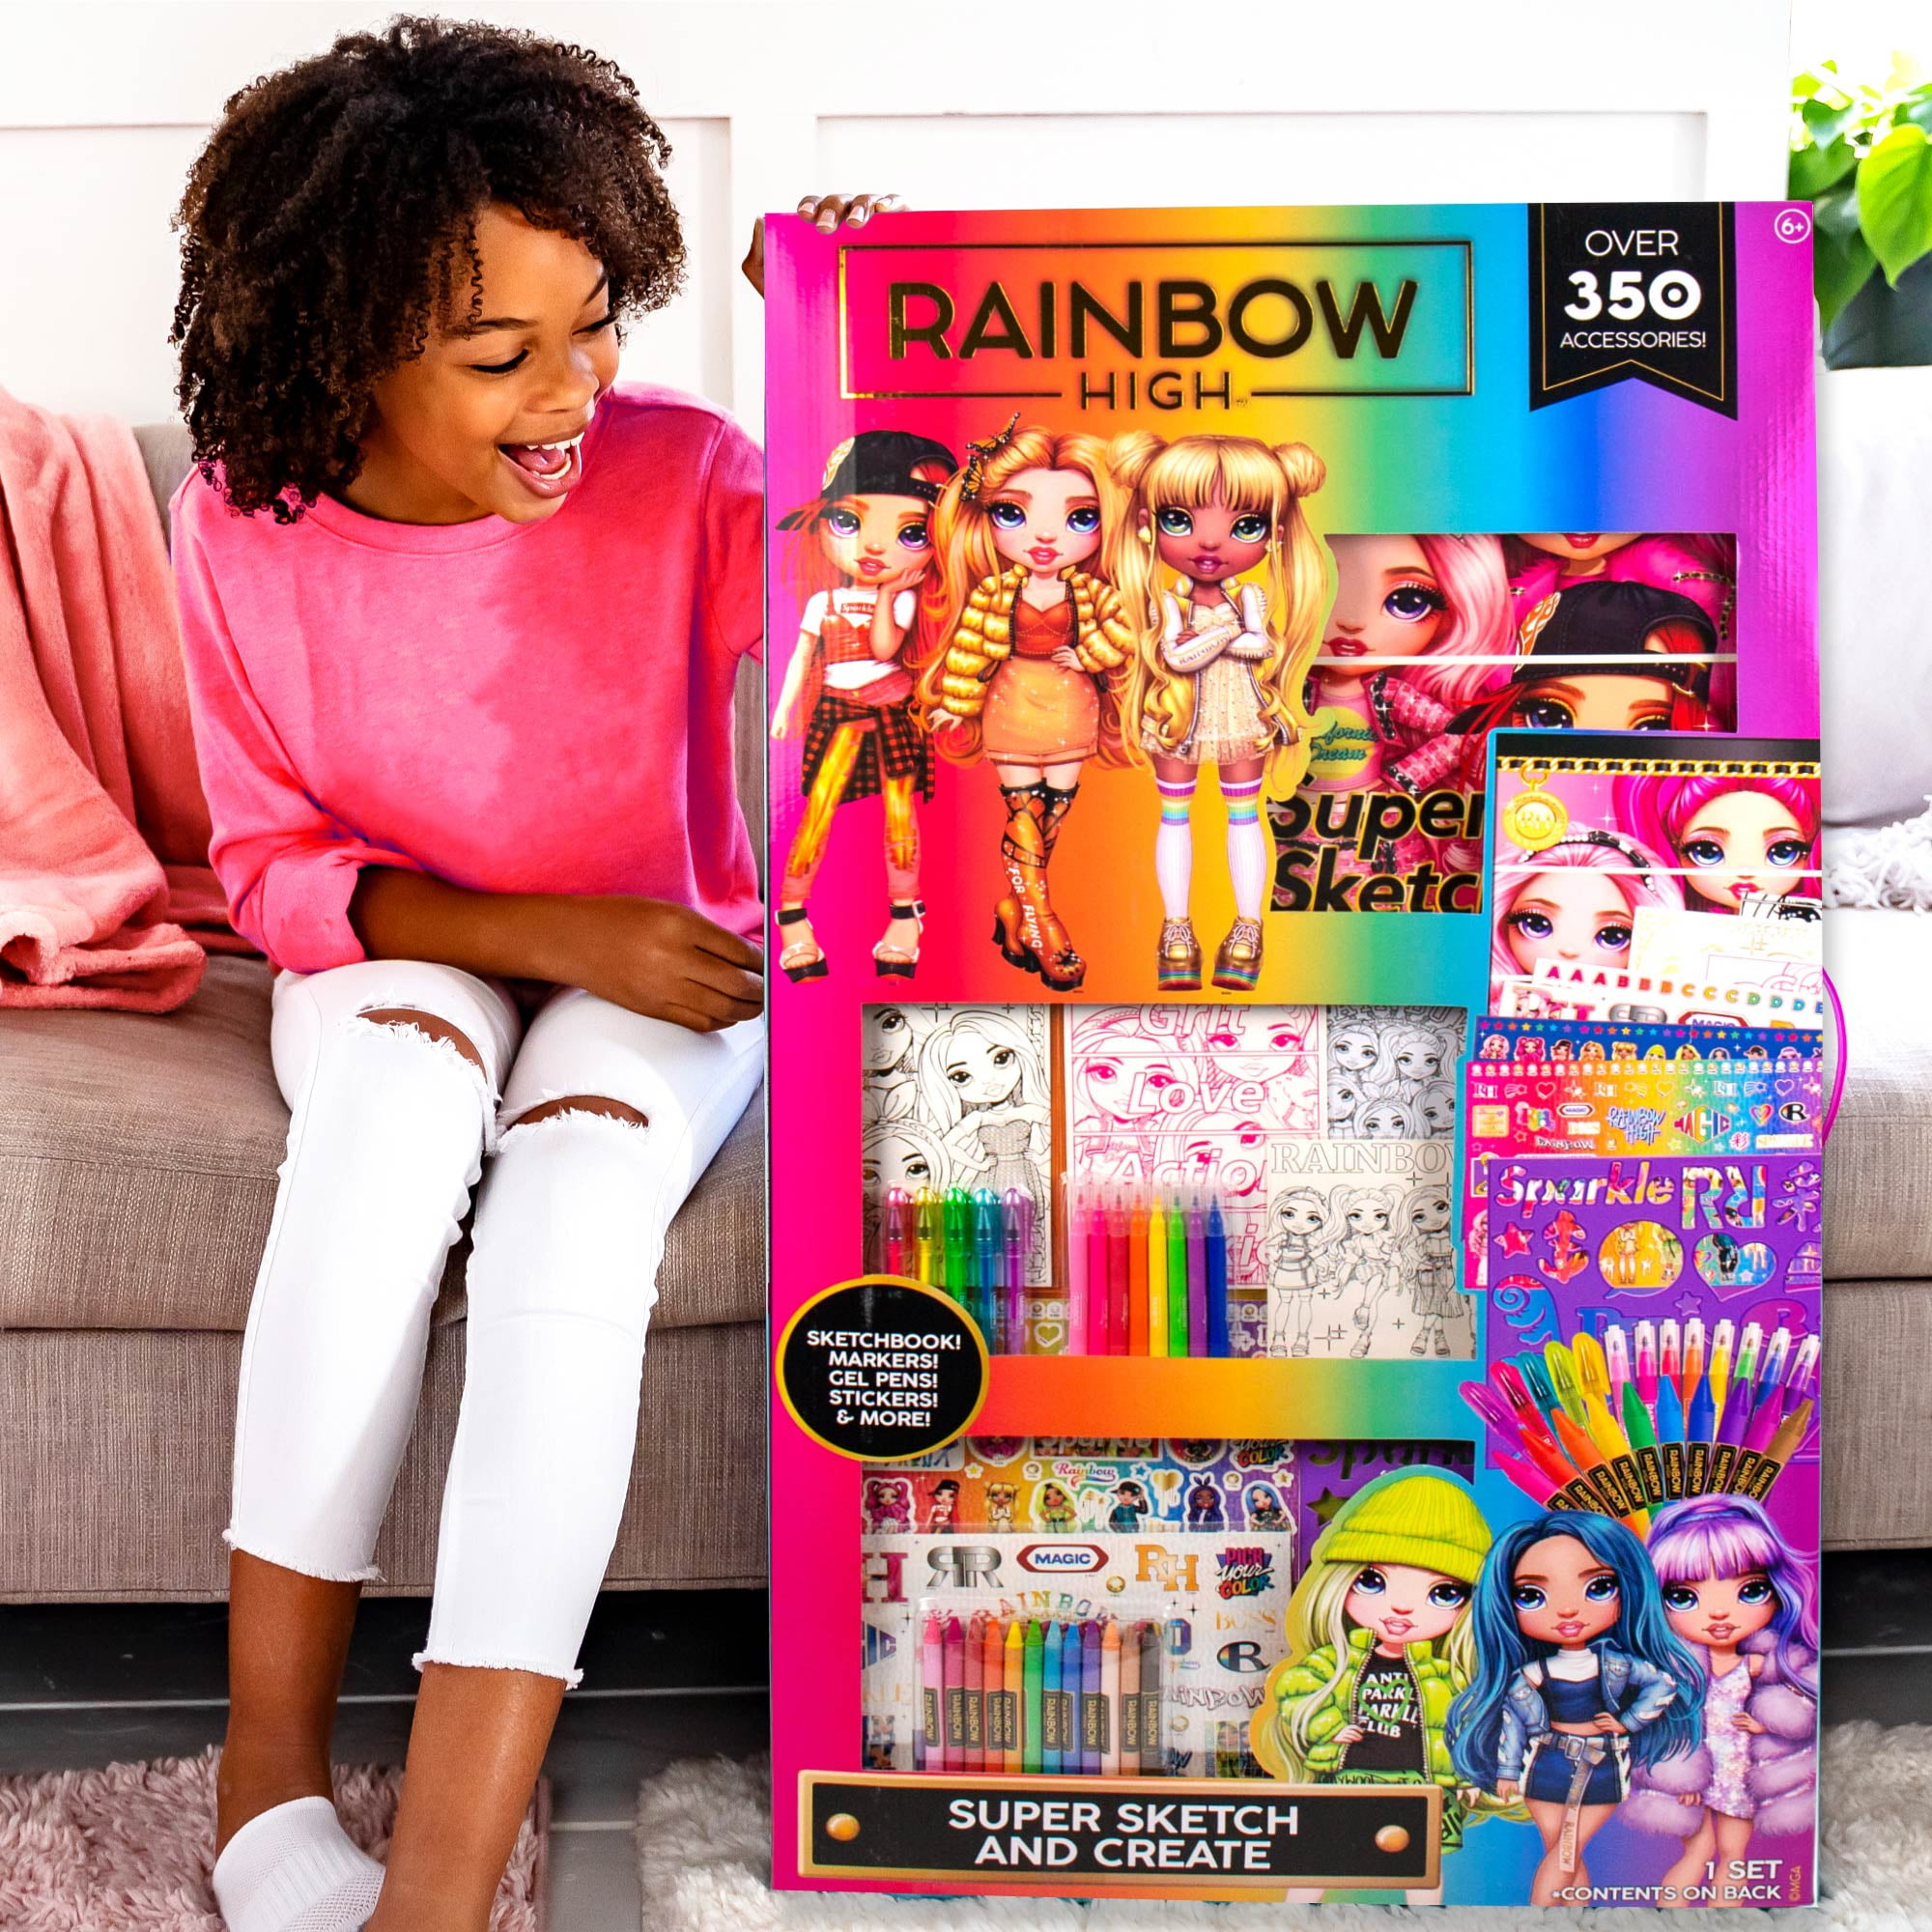 New Hot Inspiration Art Case Coloring Set - Rainbow, Art Kit For